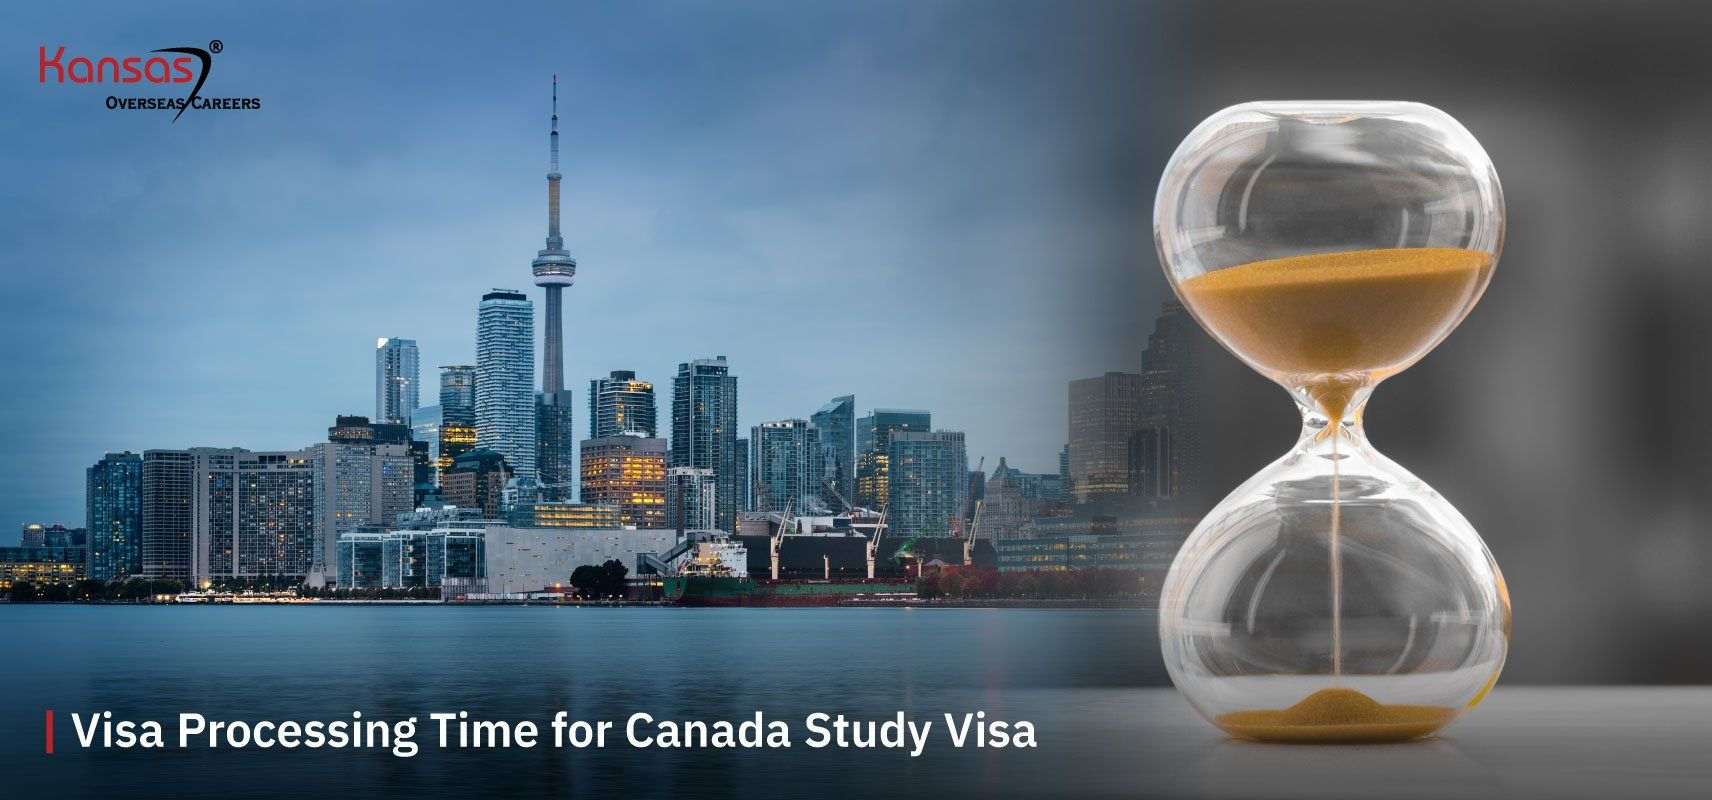 Canadian Study Visa Processing Time in Kansas®